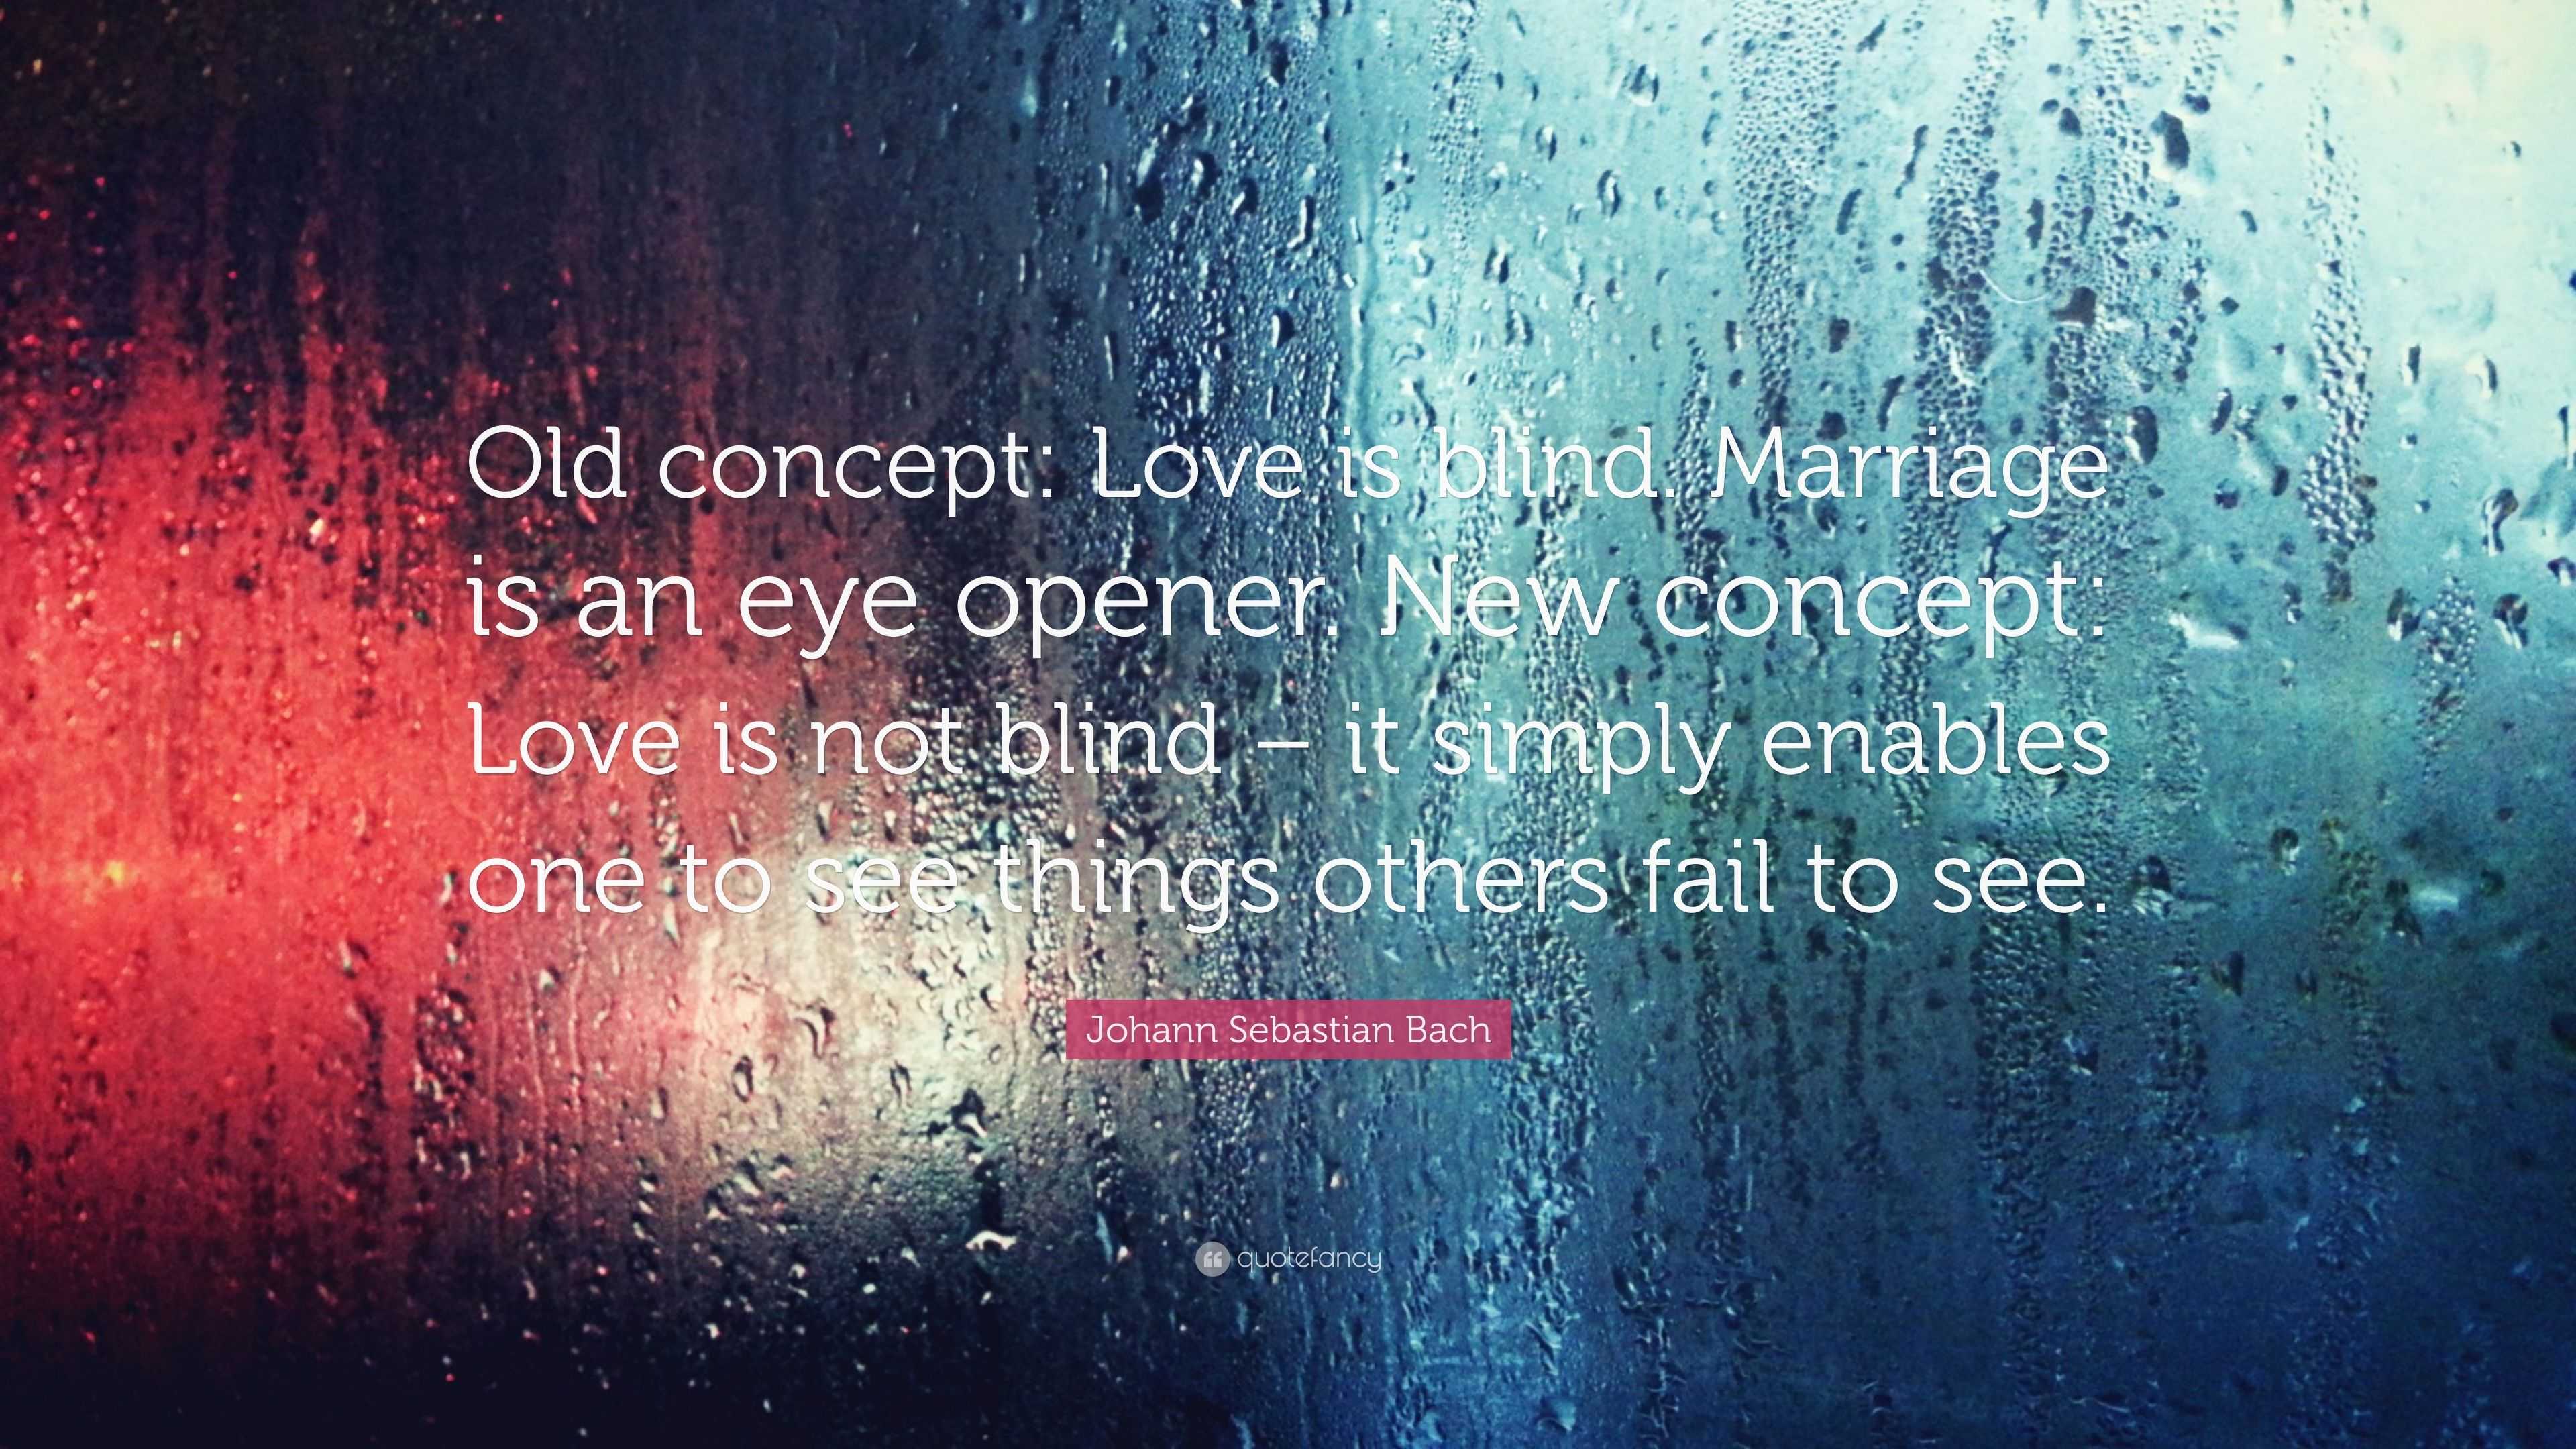 Johann Sebastian Bach Quote: "Old concept: Love is blind ...